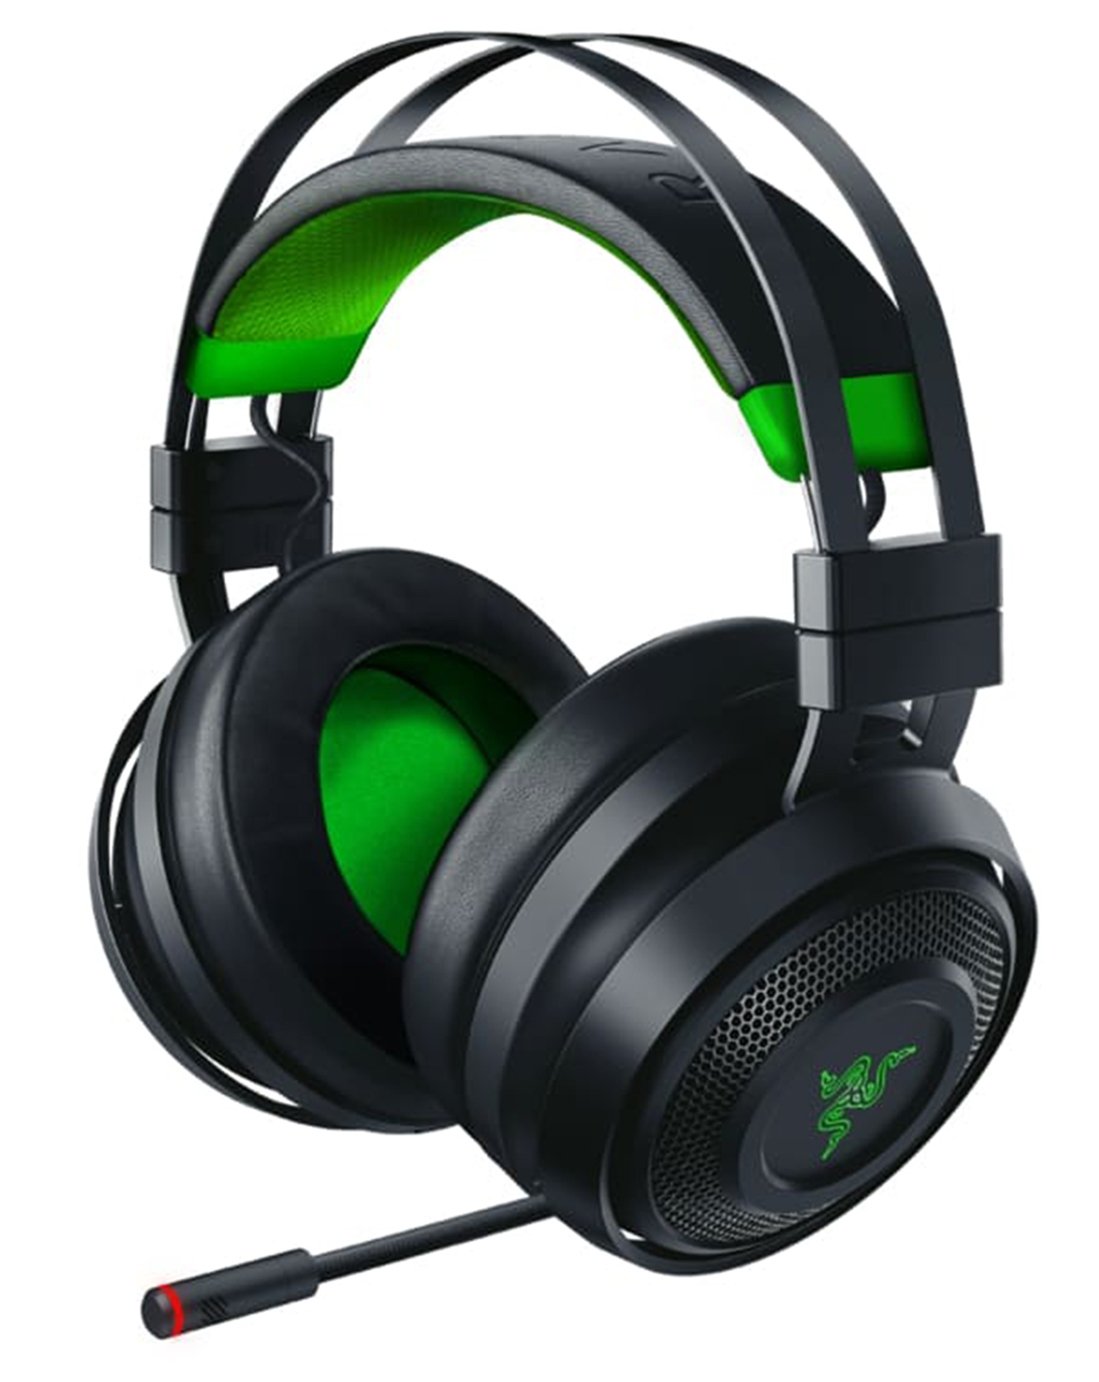 Razer Nari Ultimate Wireless Xbox One Headset Review